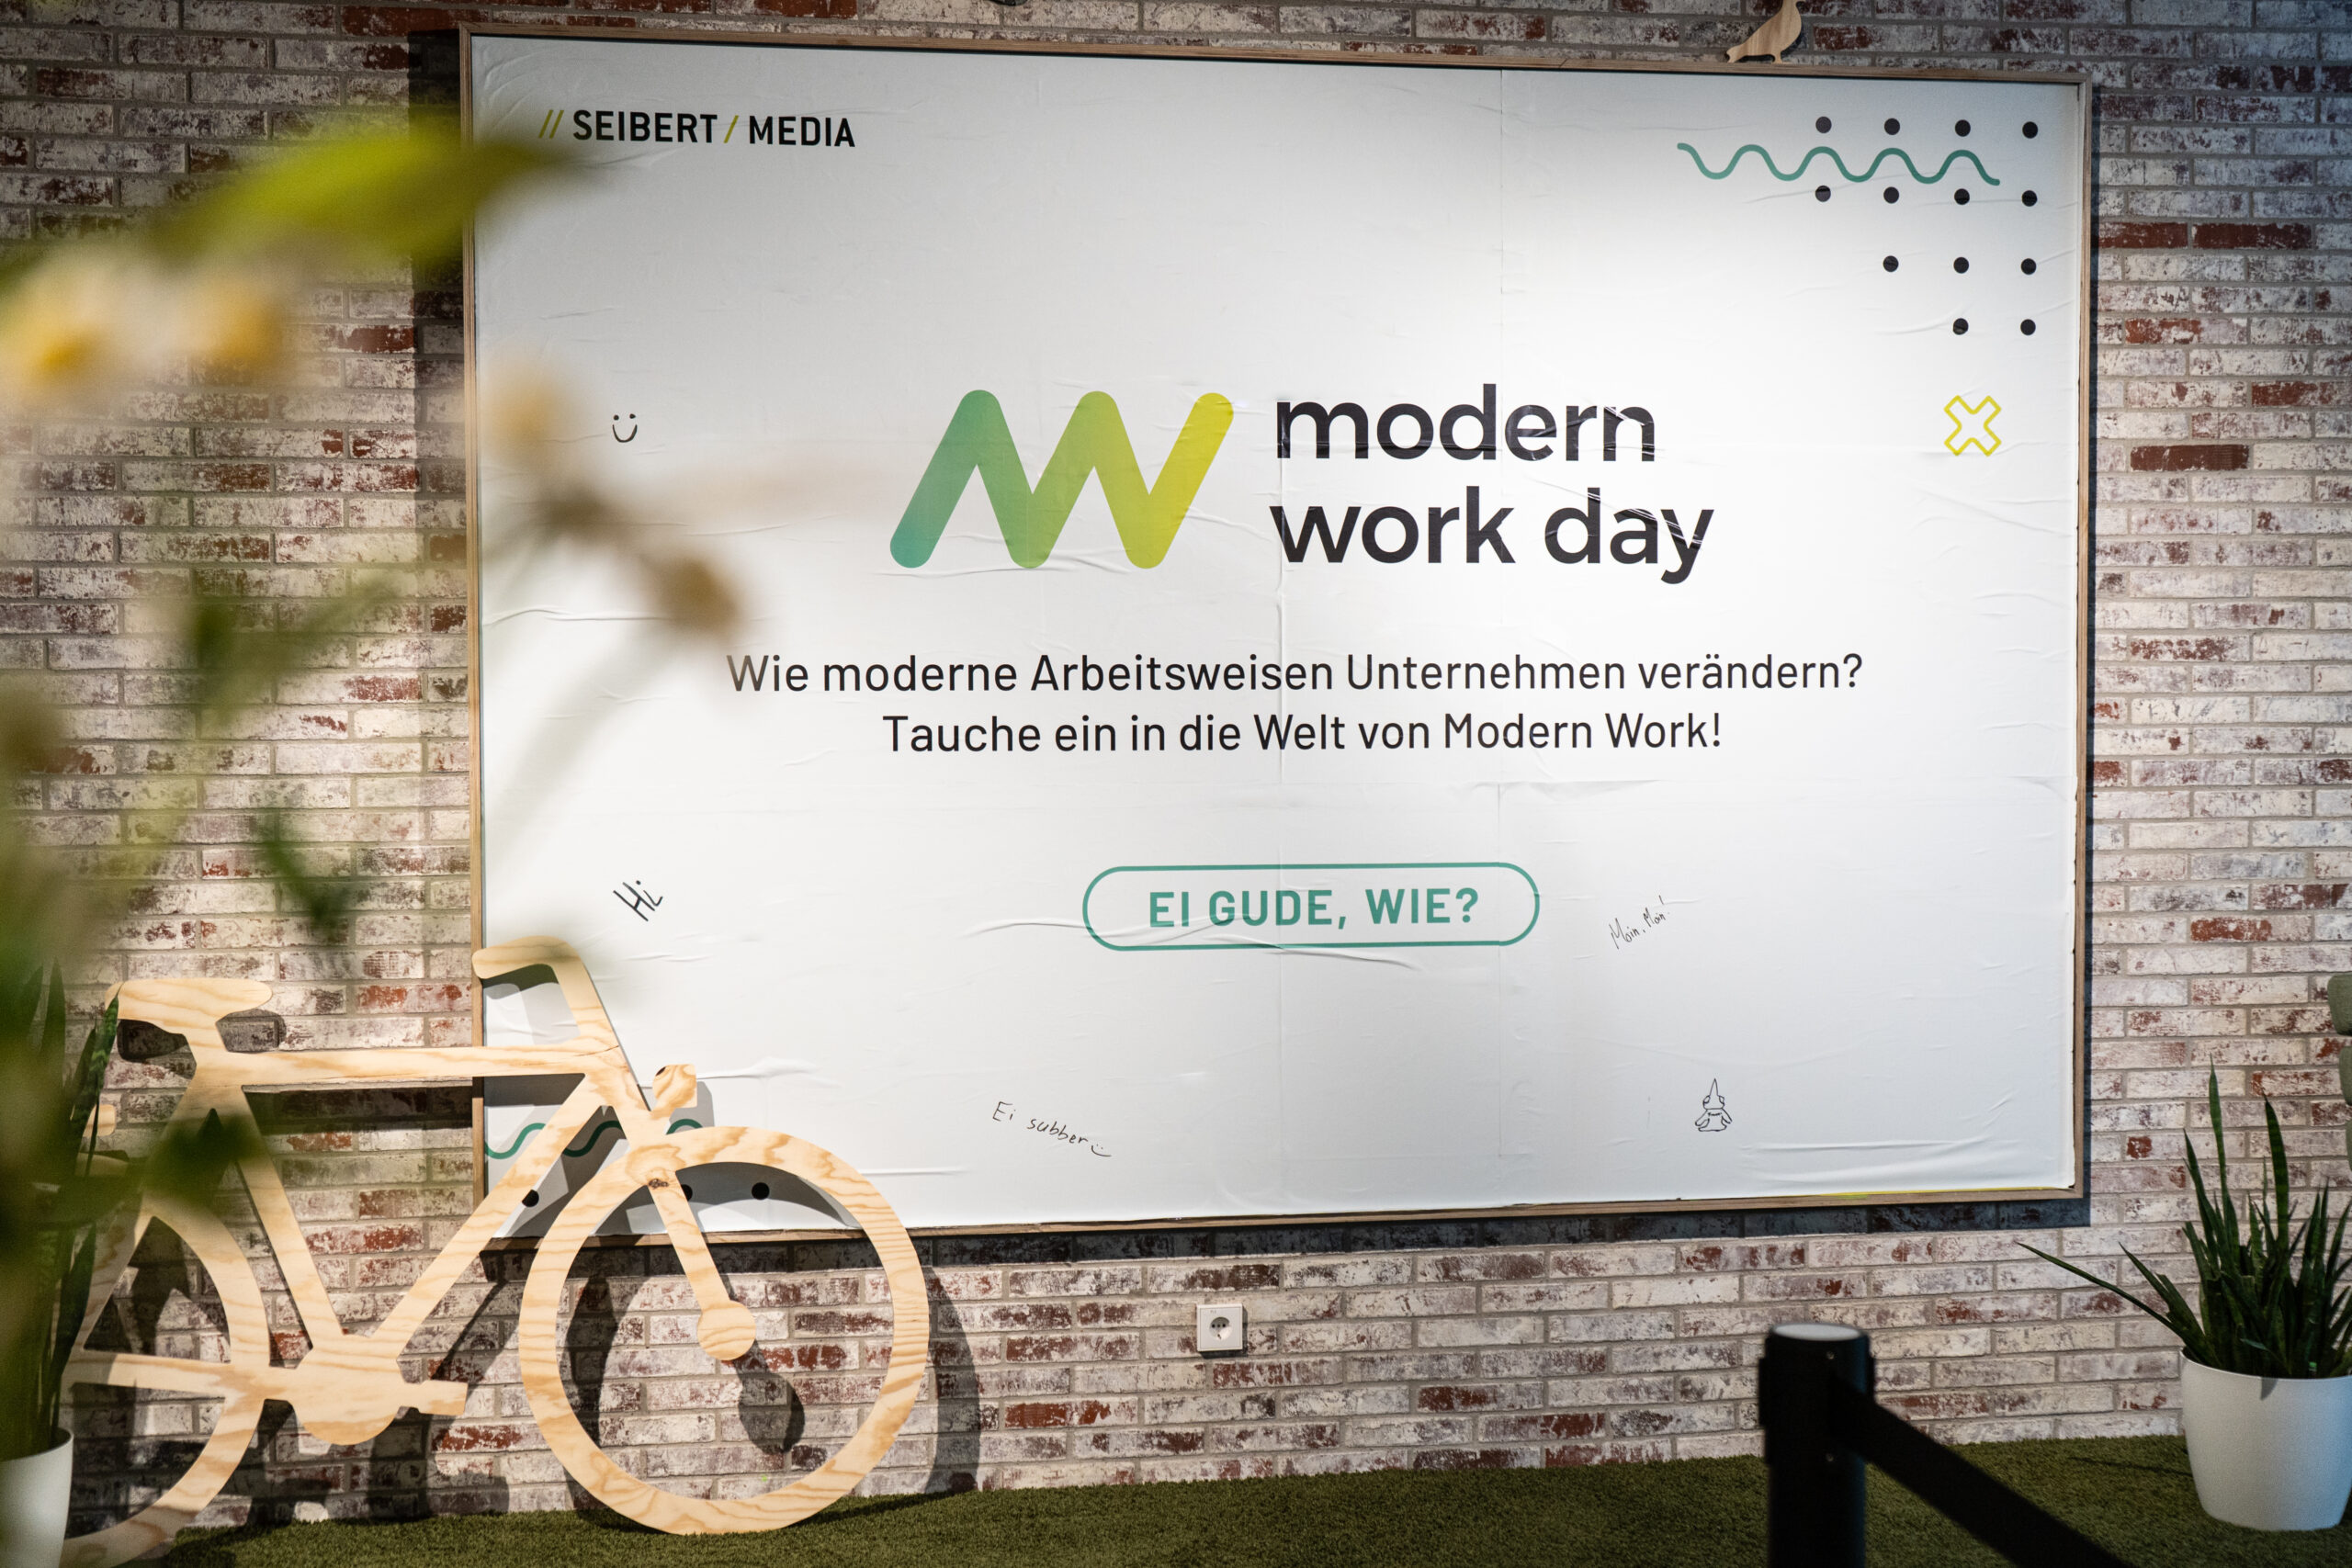 1. Modern Work Day - Plakat am Eingang